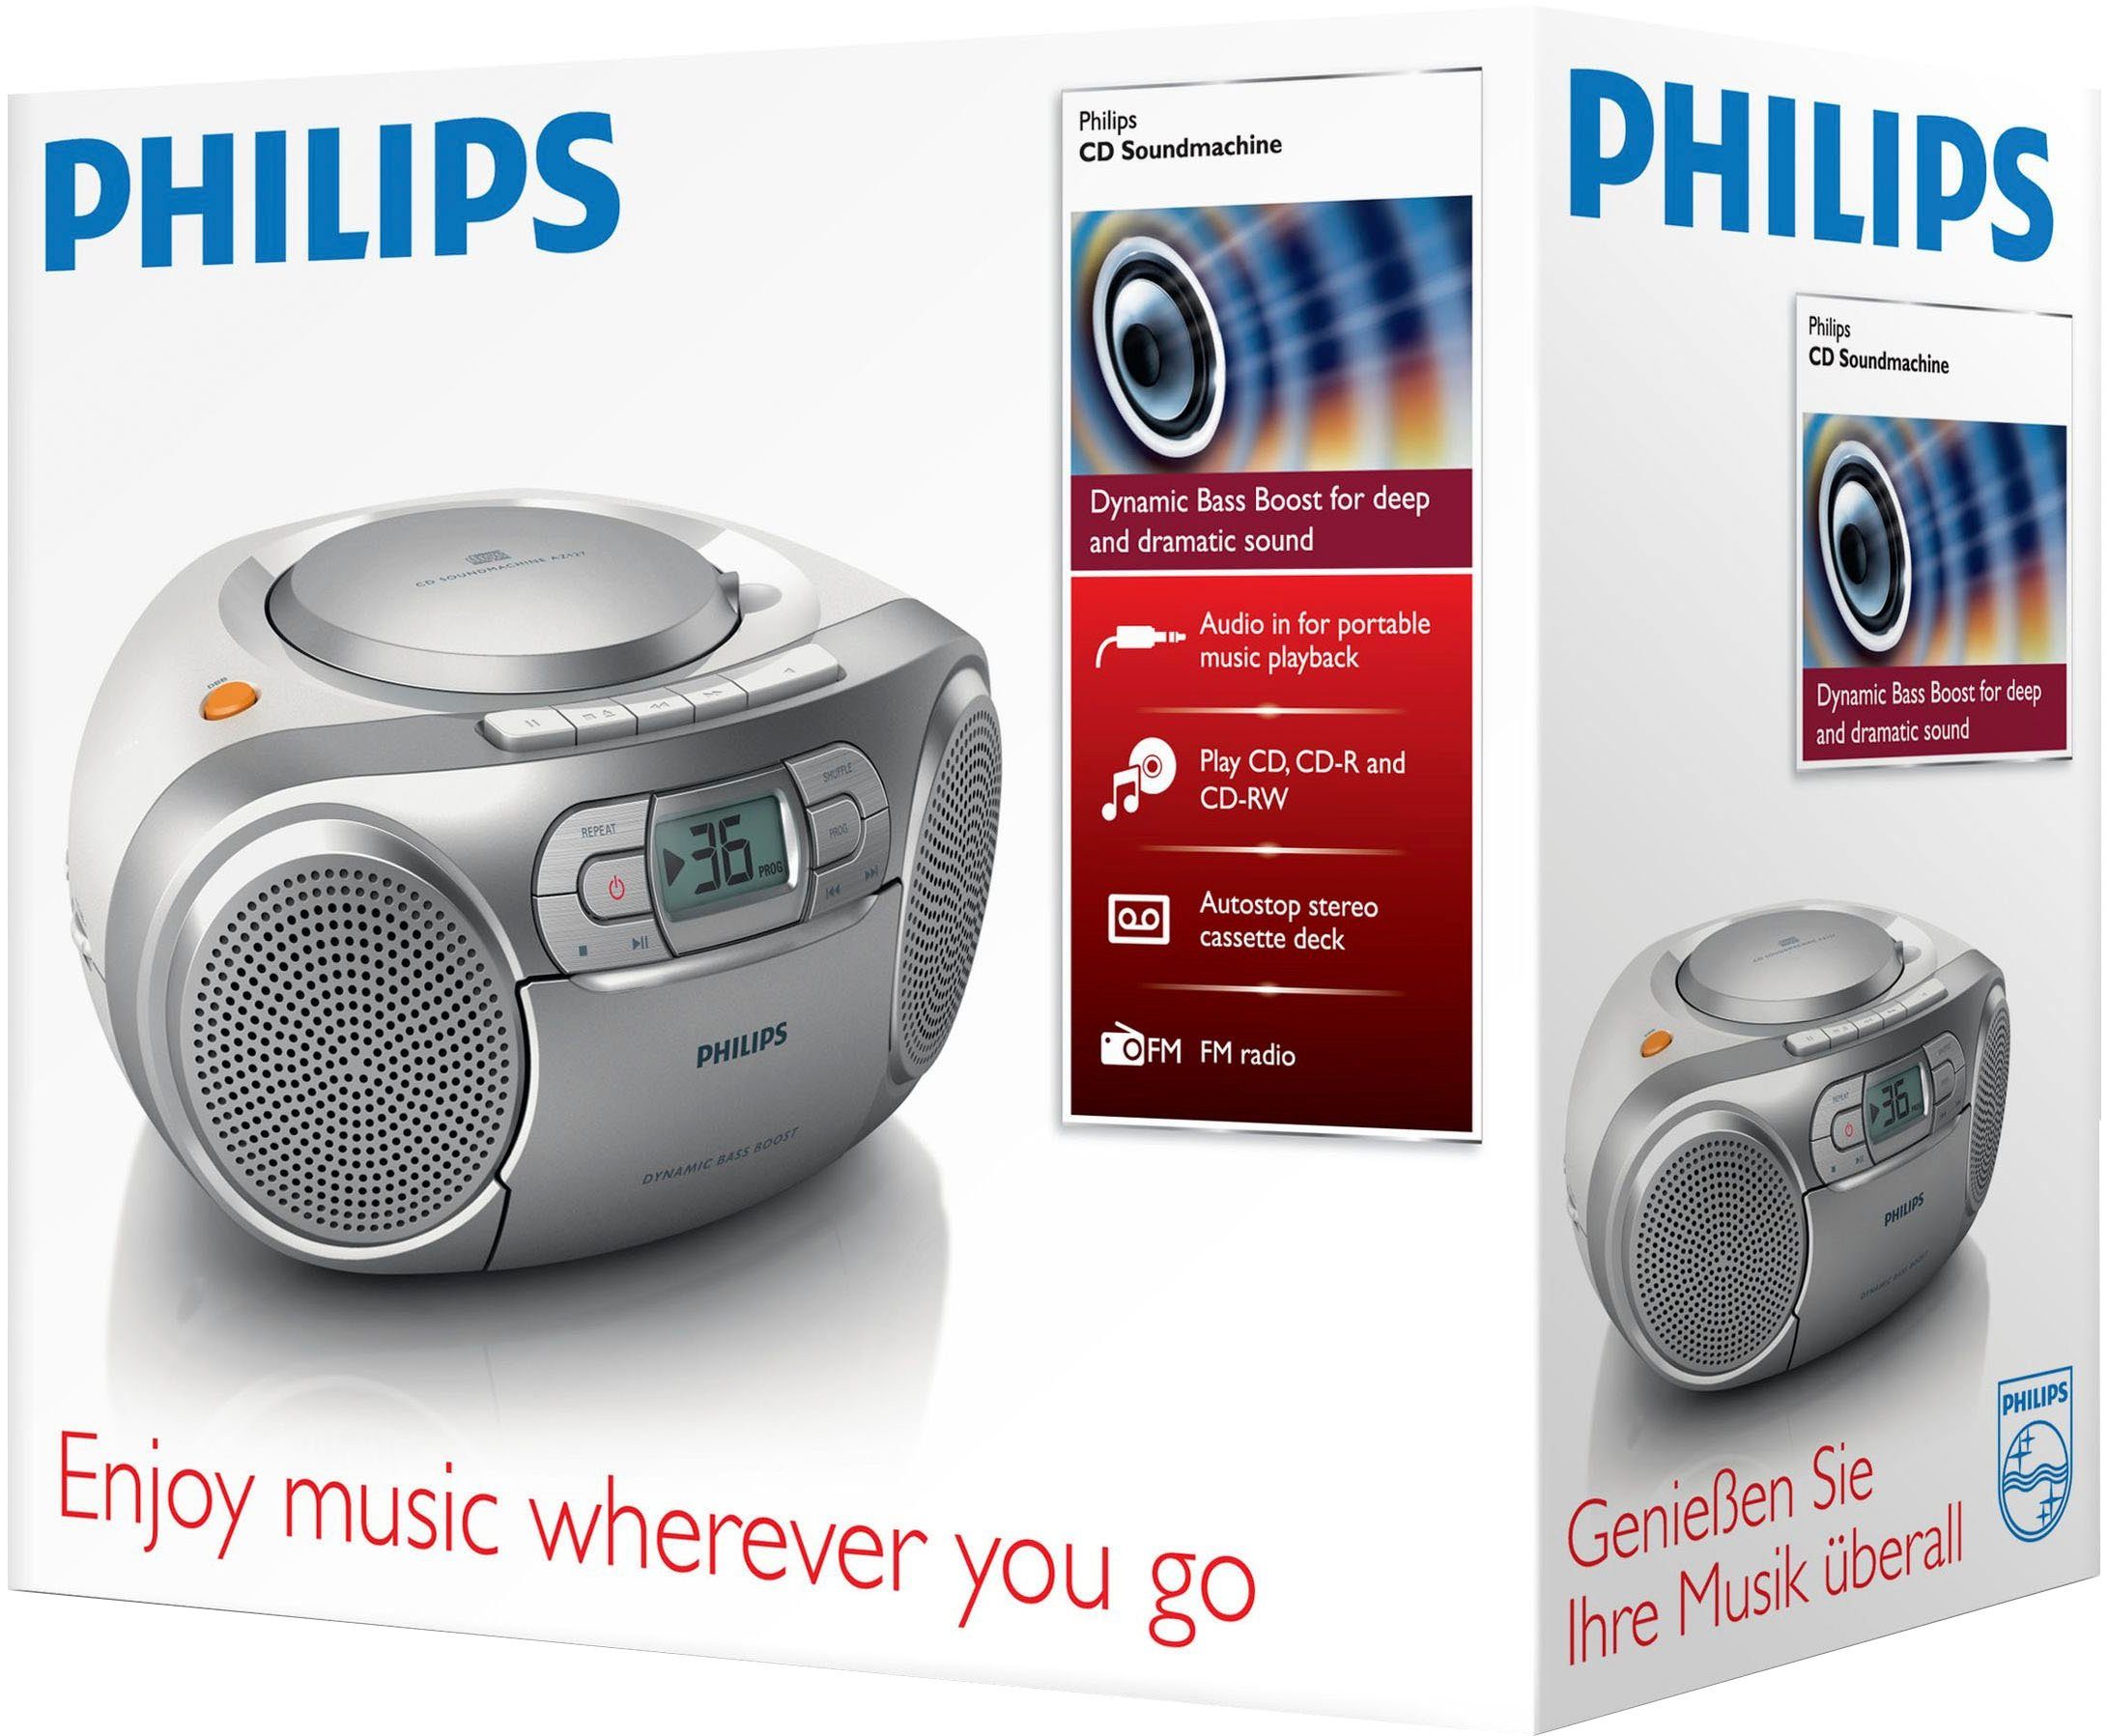 W) Radio Philips (FM-Tuner, 2 AZ127